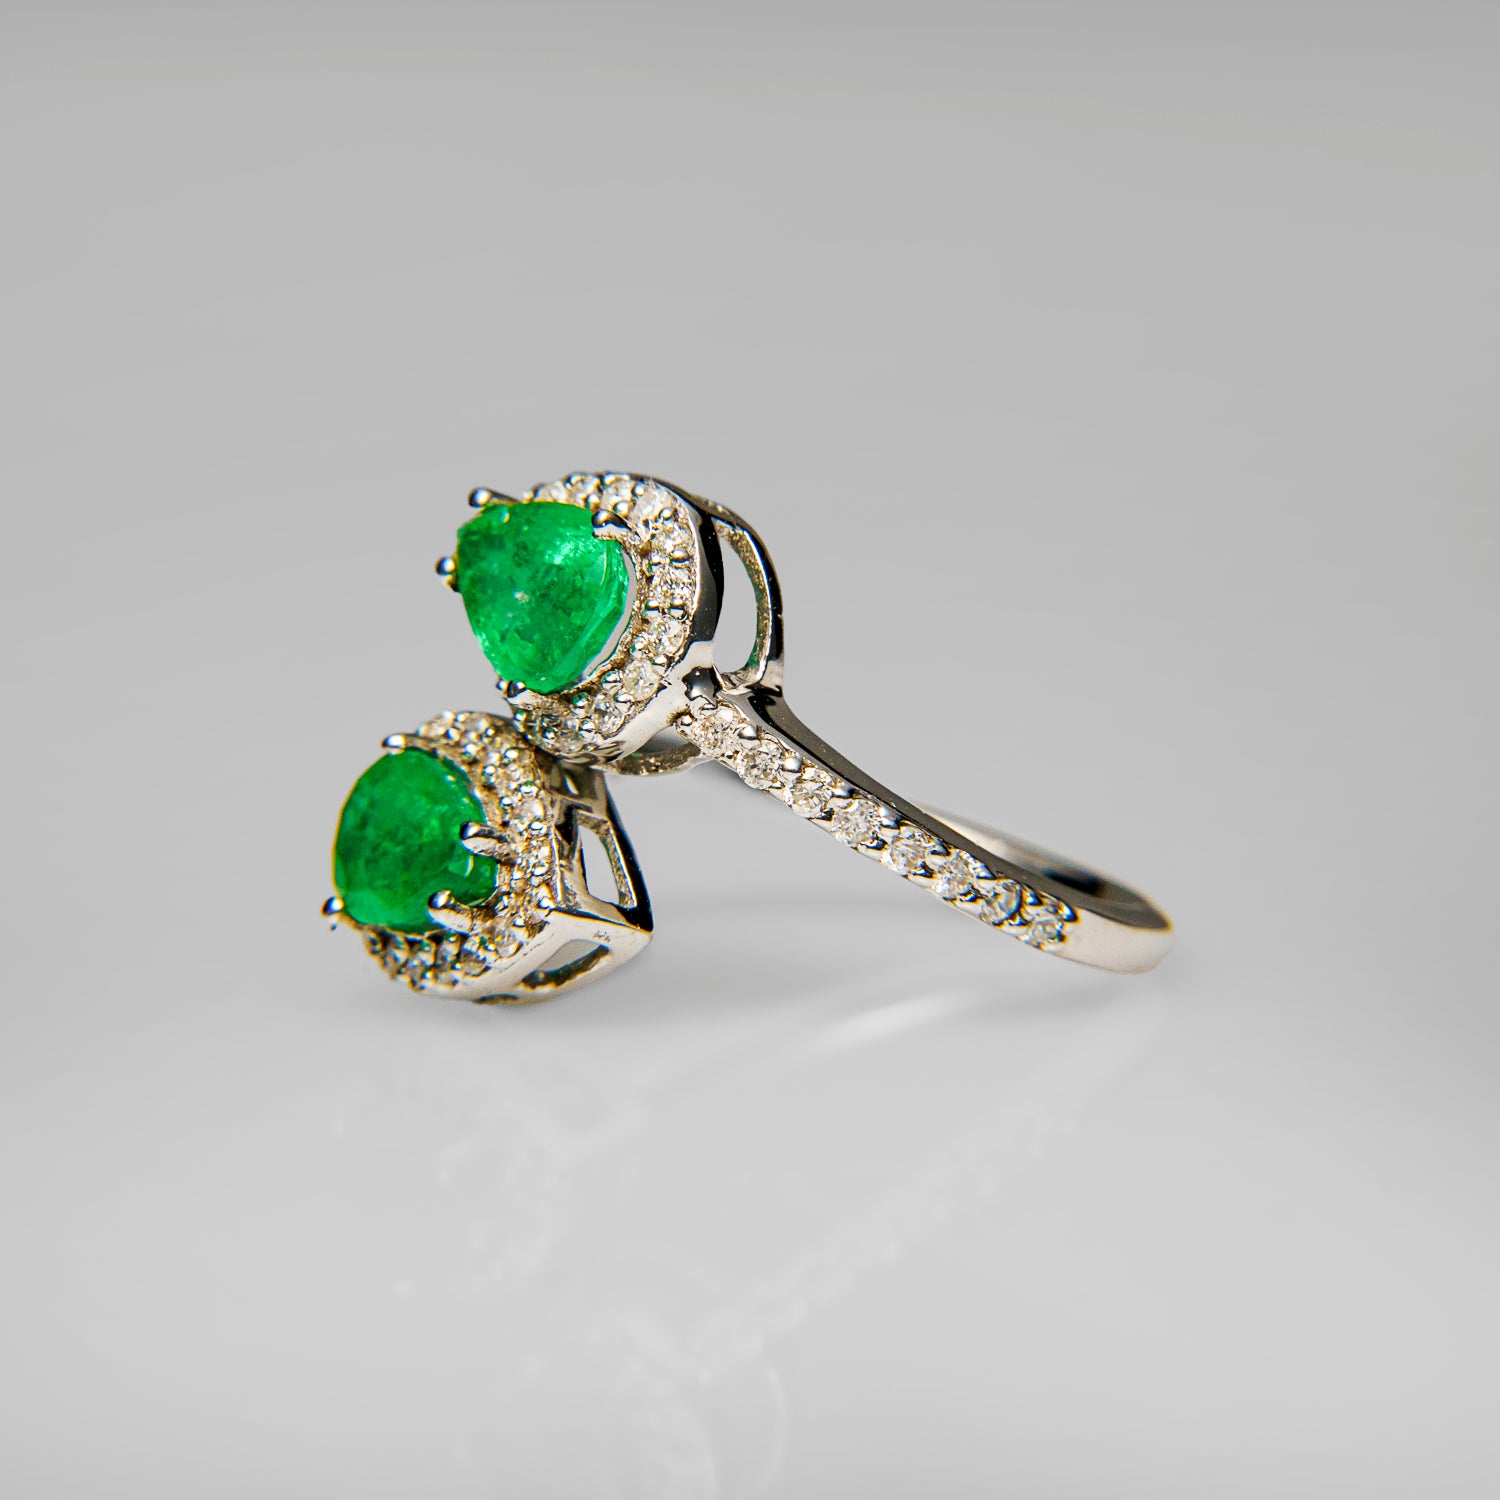 14k White Gold Emerald (1.3ct.) Ring